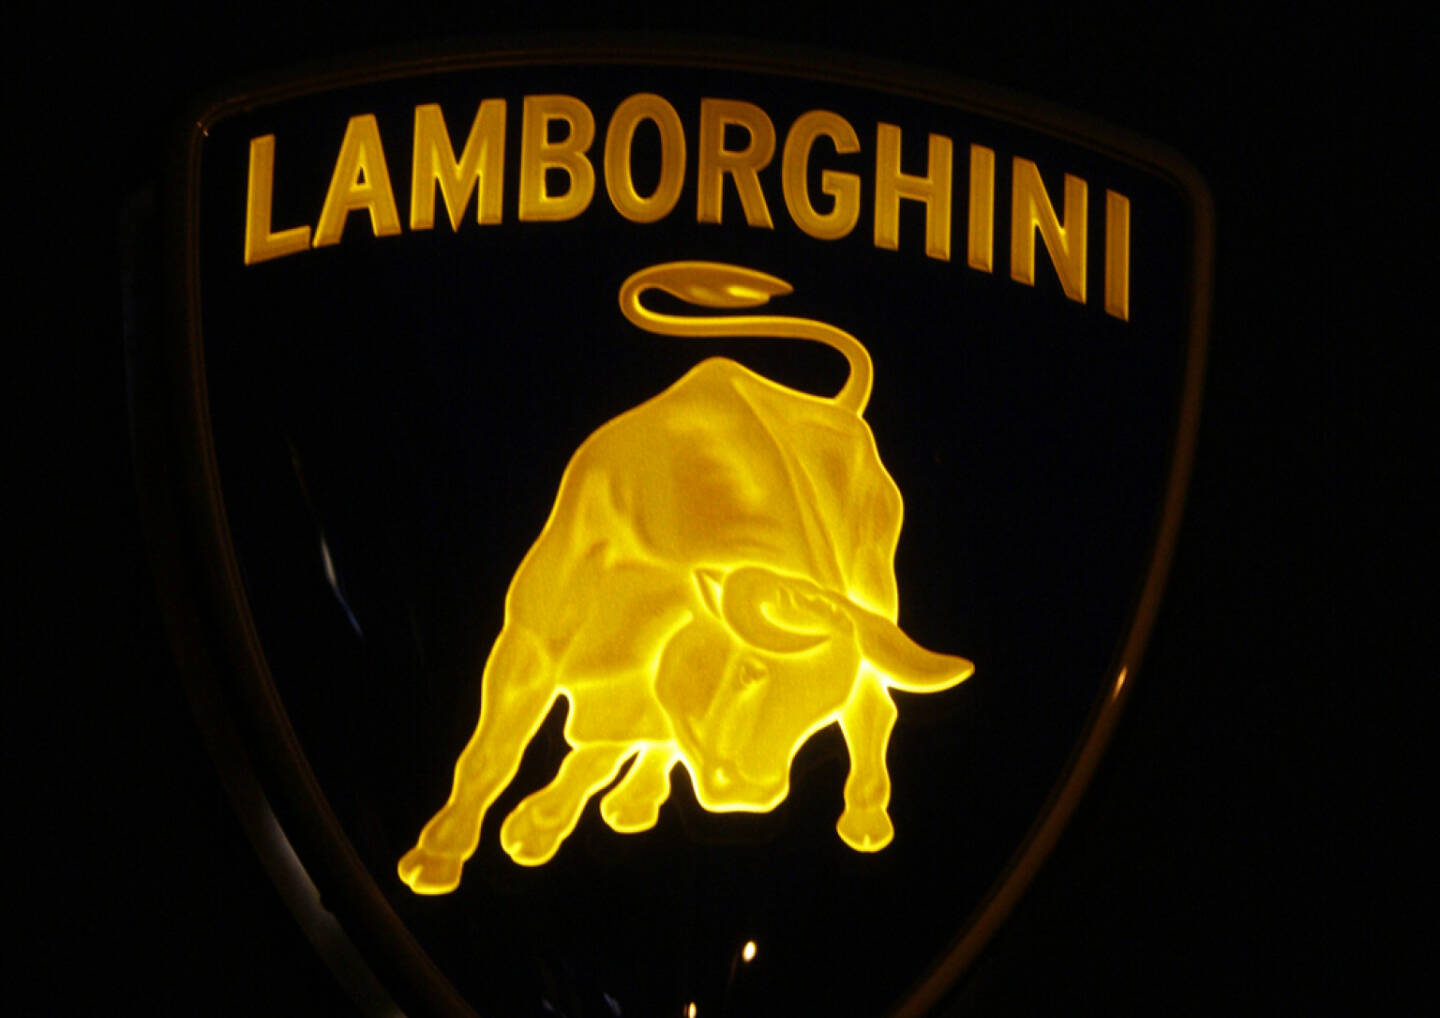 Lamborghini, <a href=http://www.shutterstock.com/gallery-320989p1.html?cr=00&pl=edit-00>360b</a> / <a href=http://www.shutterstock.com/editorial?cr=00&pl=edit-00>Shutterstock.com</a>, 360b / Shutterstock.com